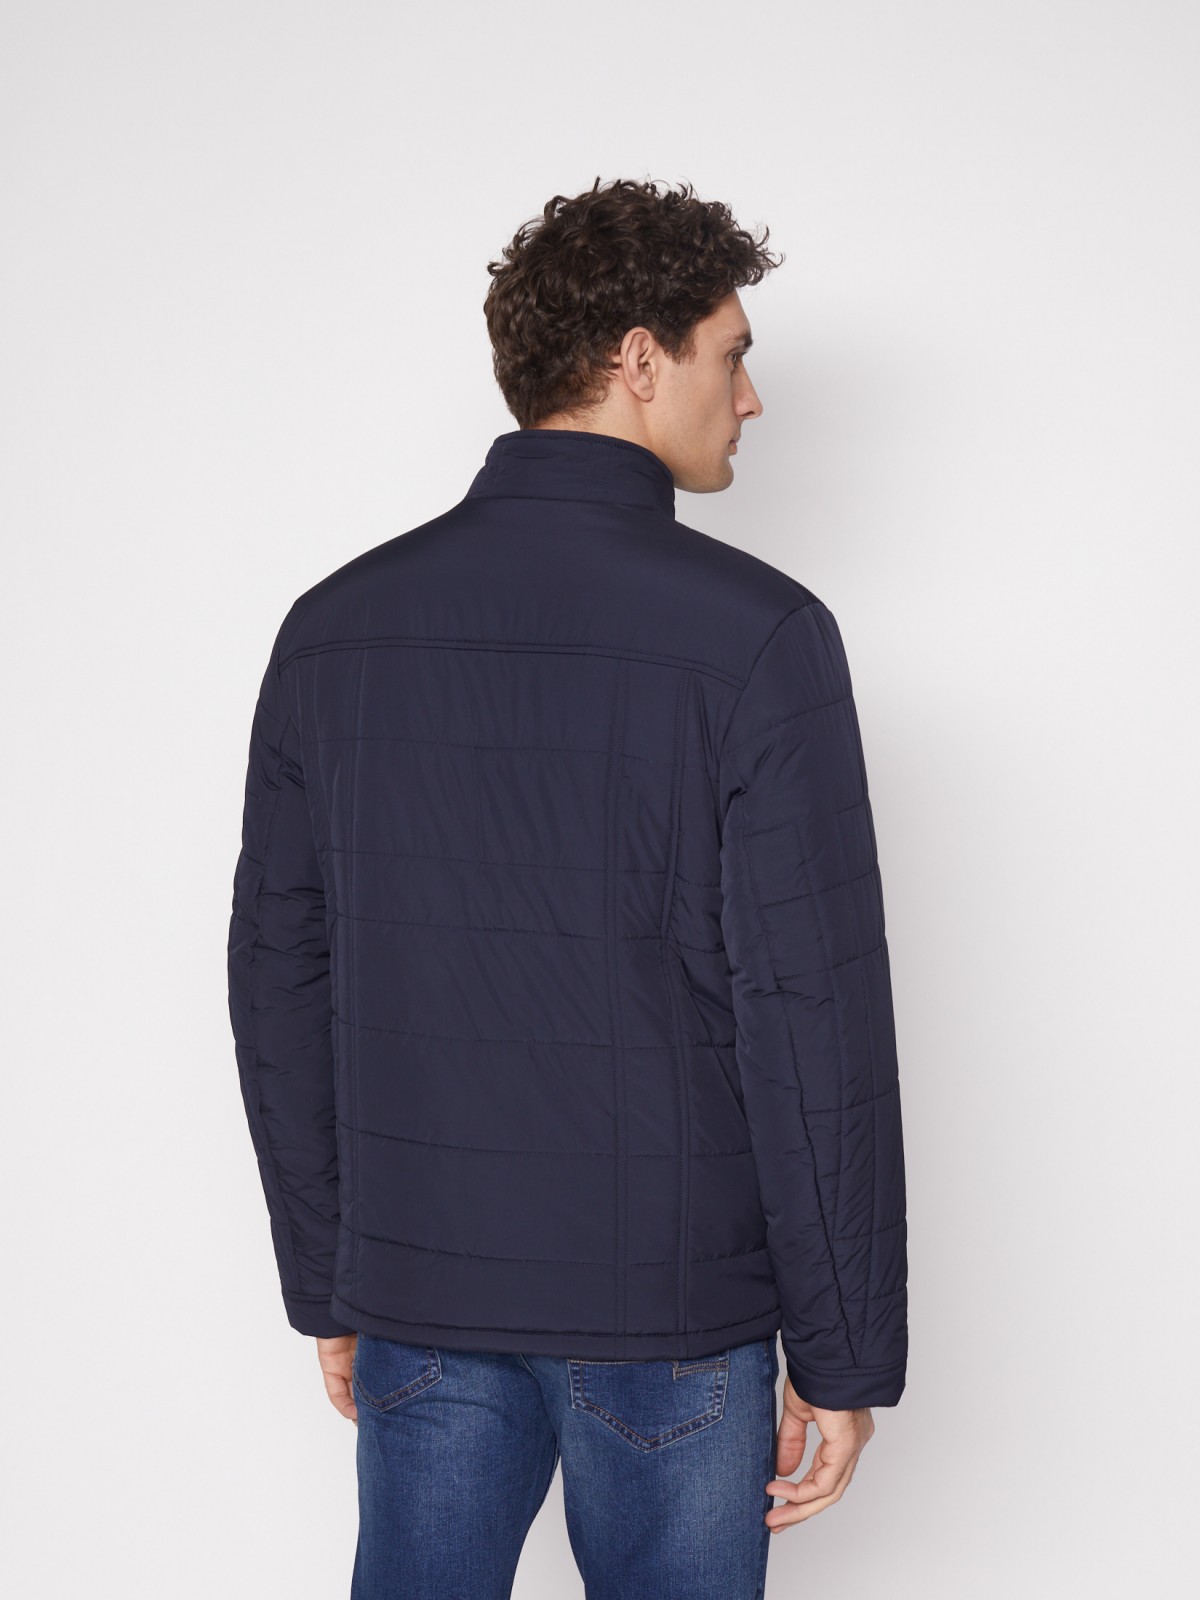 Куртка с воротником-стойкой zolla 012135159064, цвет темно-синий, размер L - фото 6